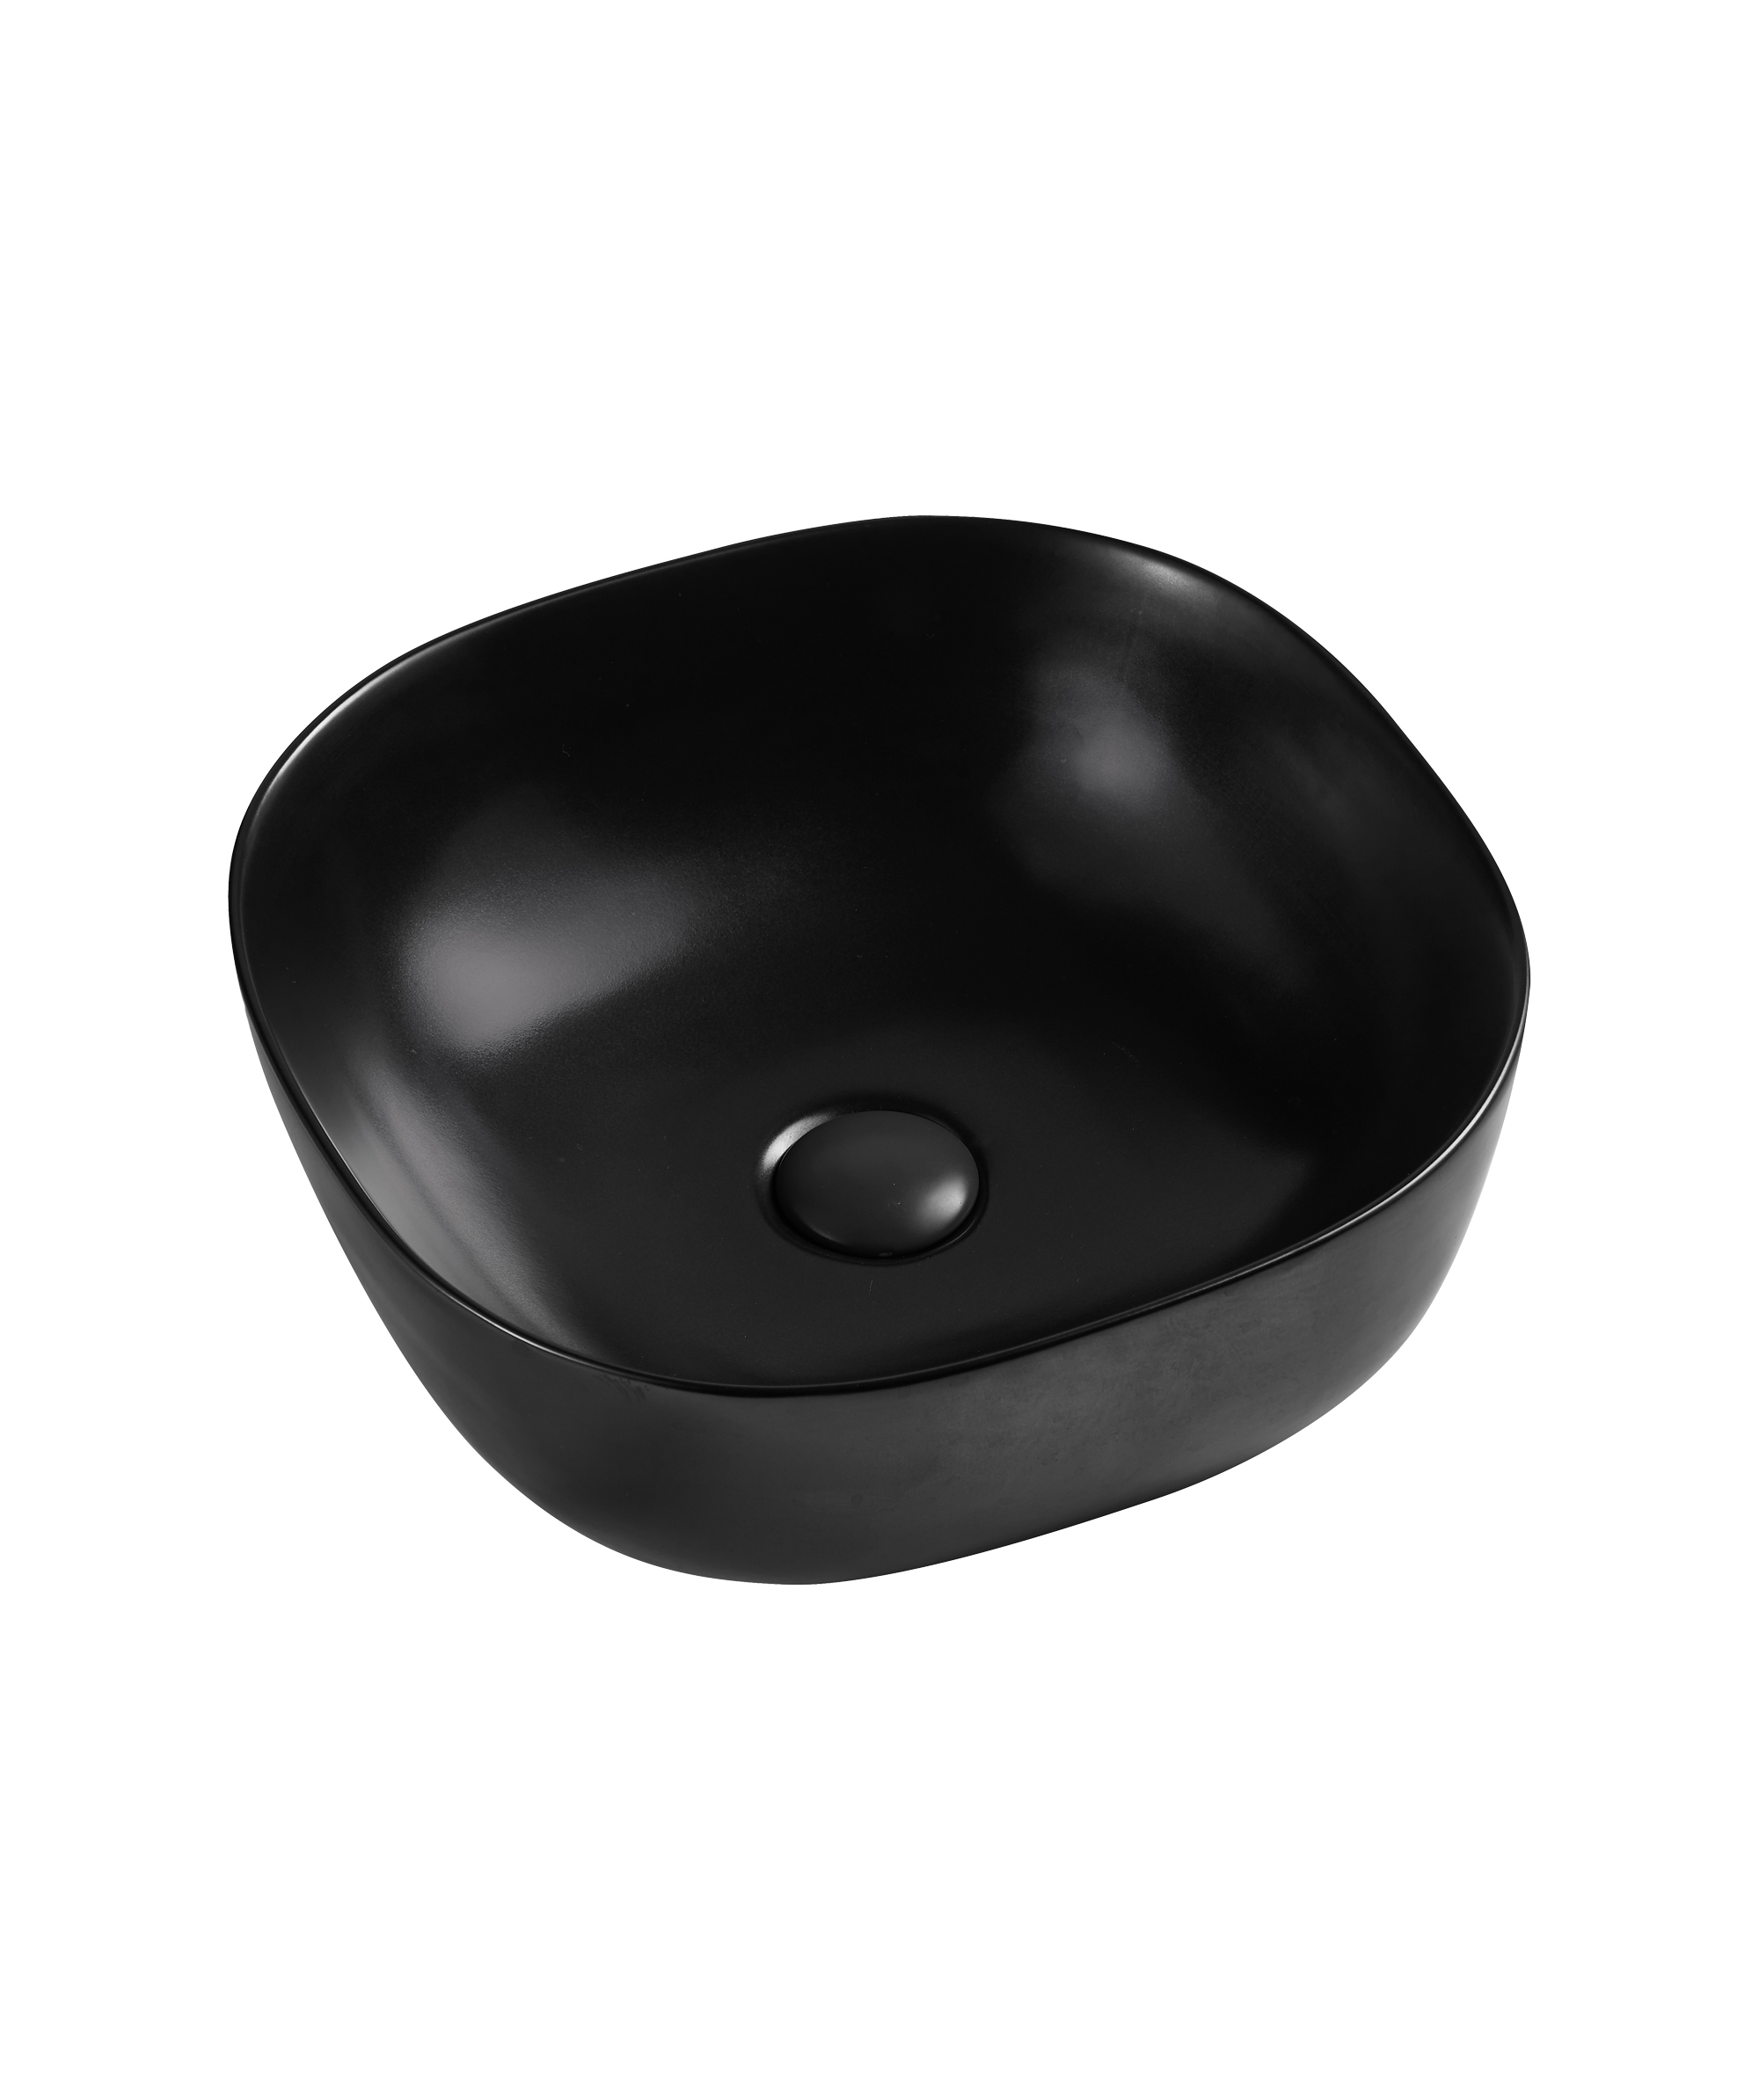 Limni 370 ceramic basin - Black Silk Matte